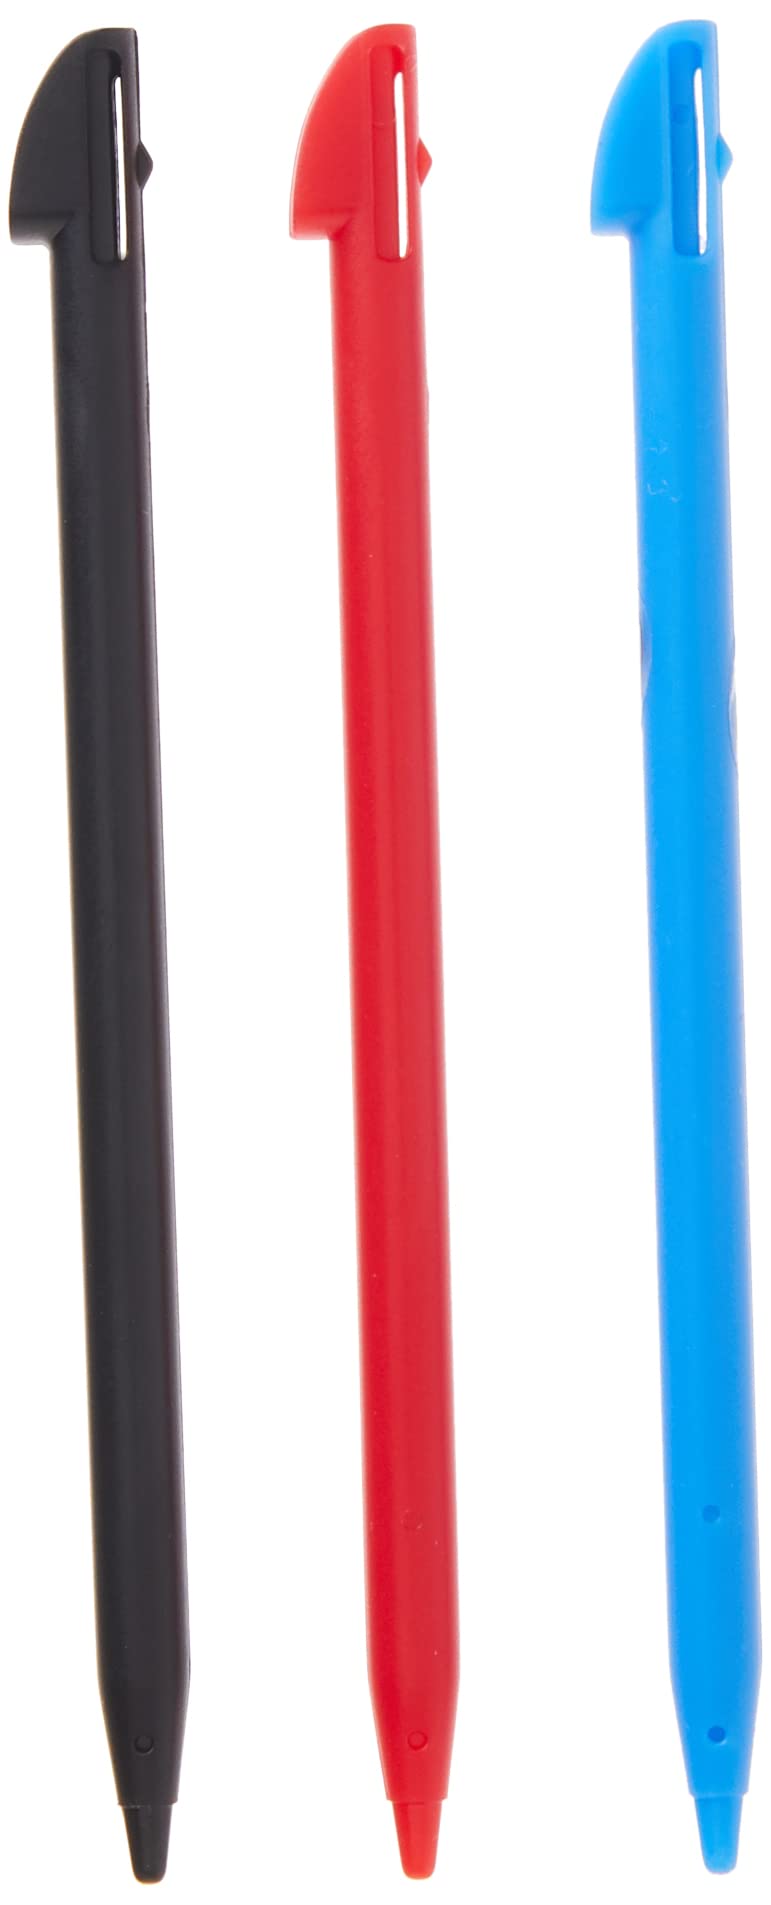  [AUSTRALIA] - Tomee Stylus Pen Set for Nintendo 3DS XL (3-Pack)